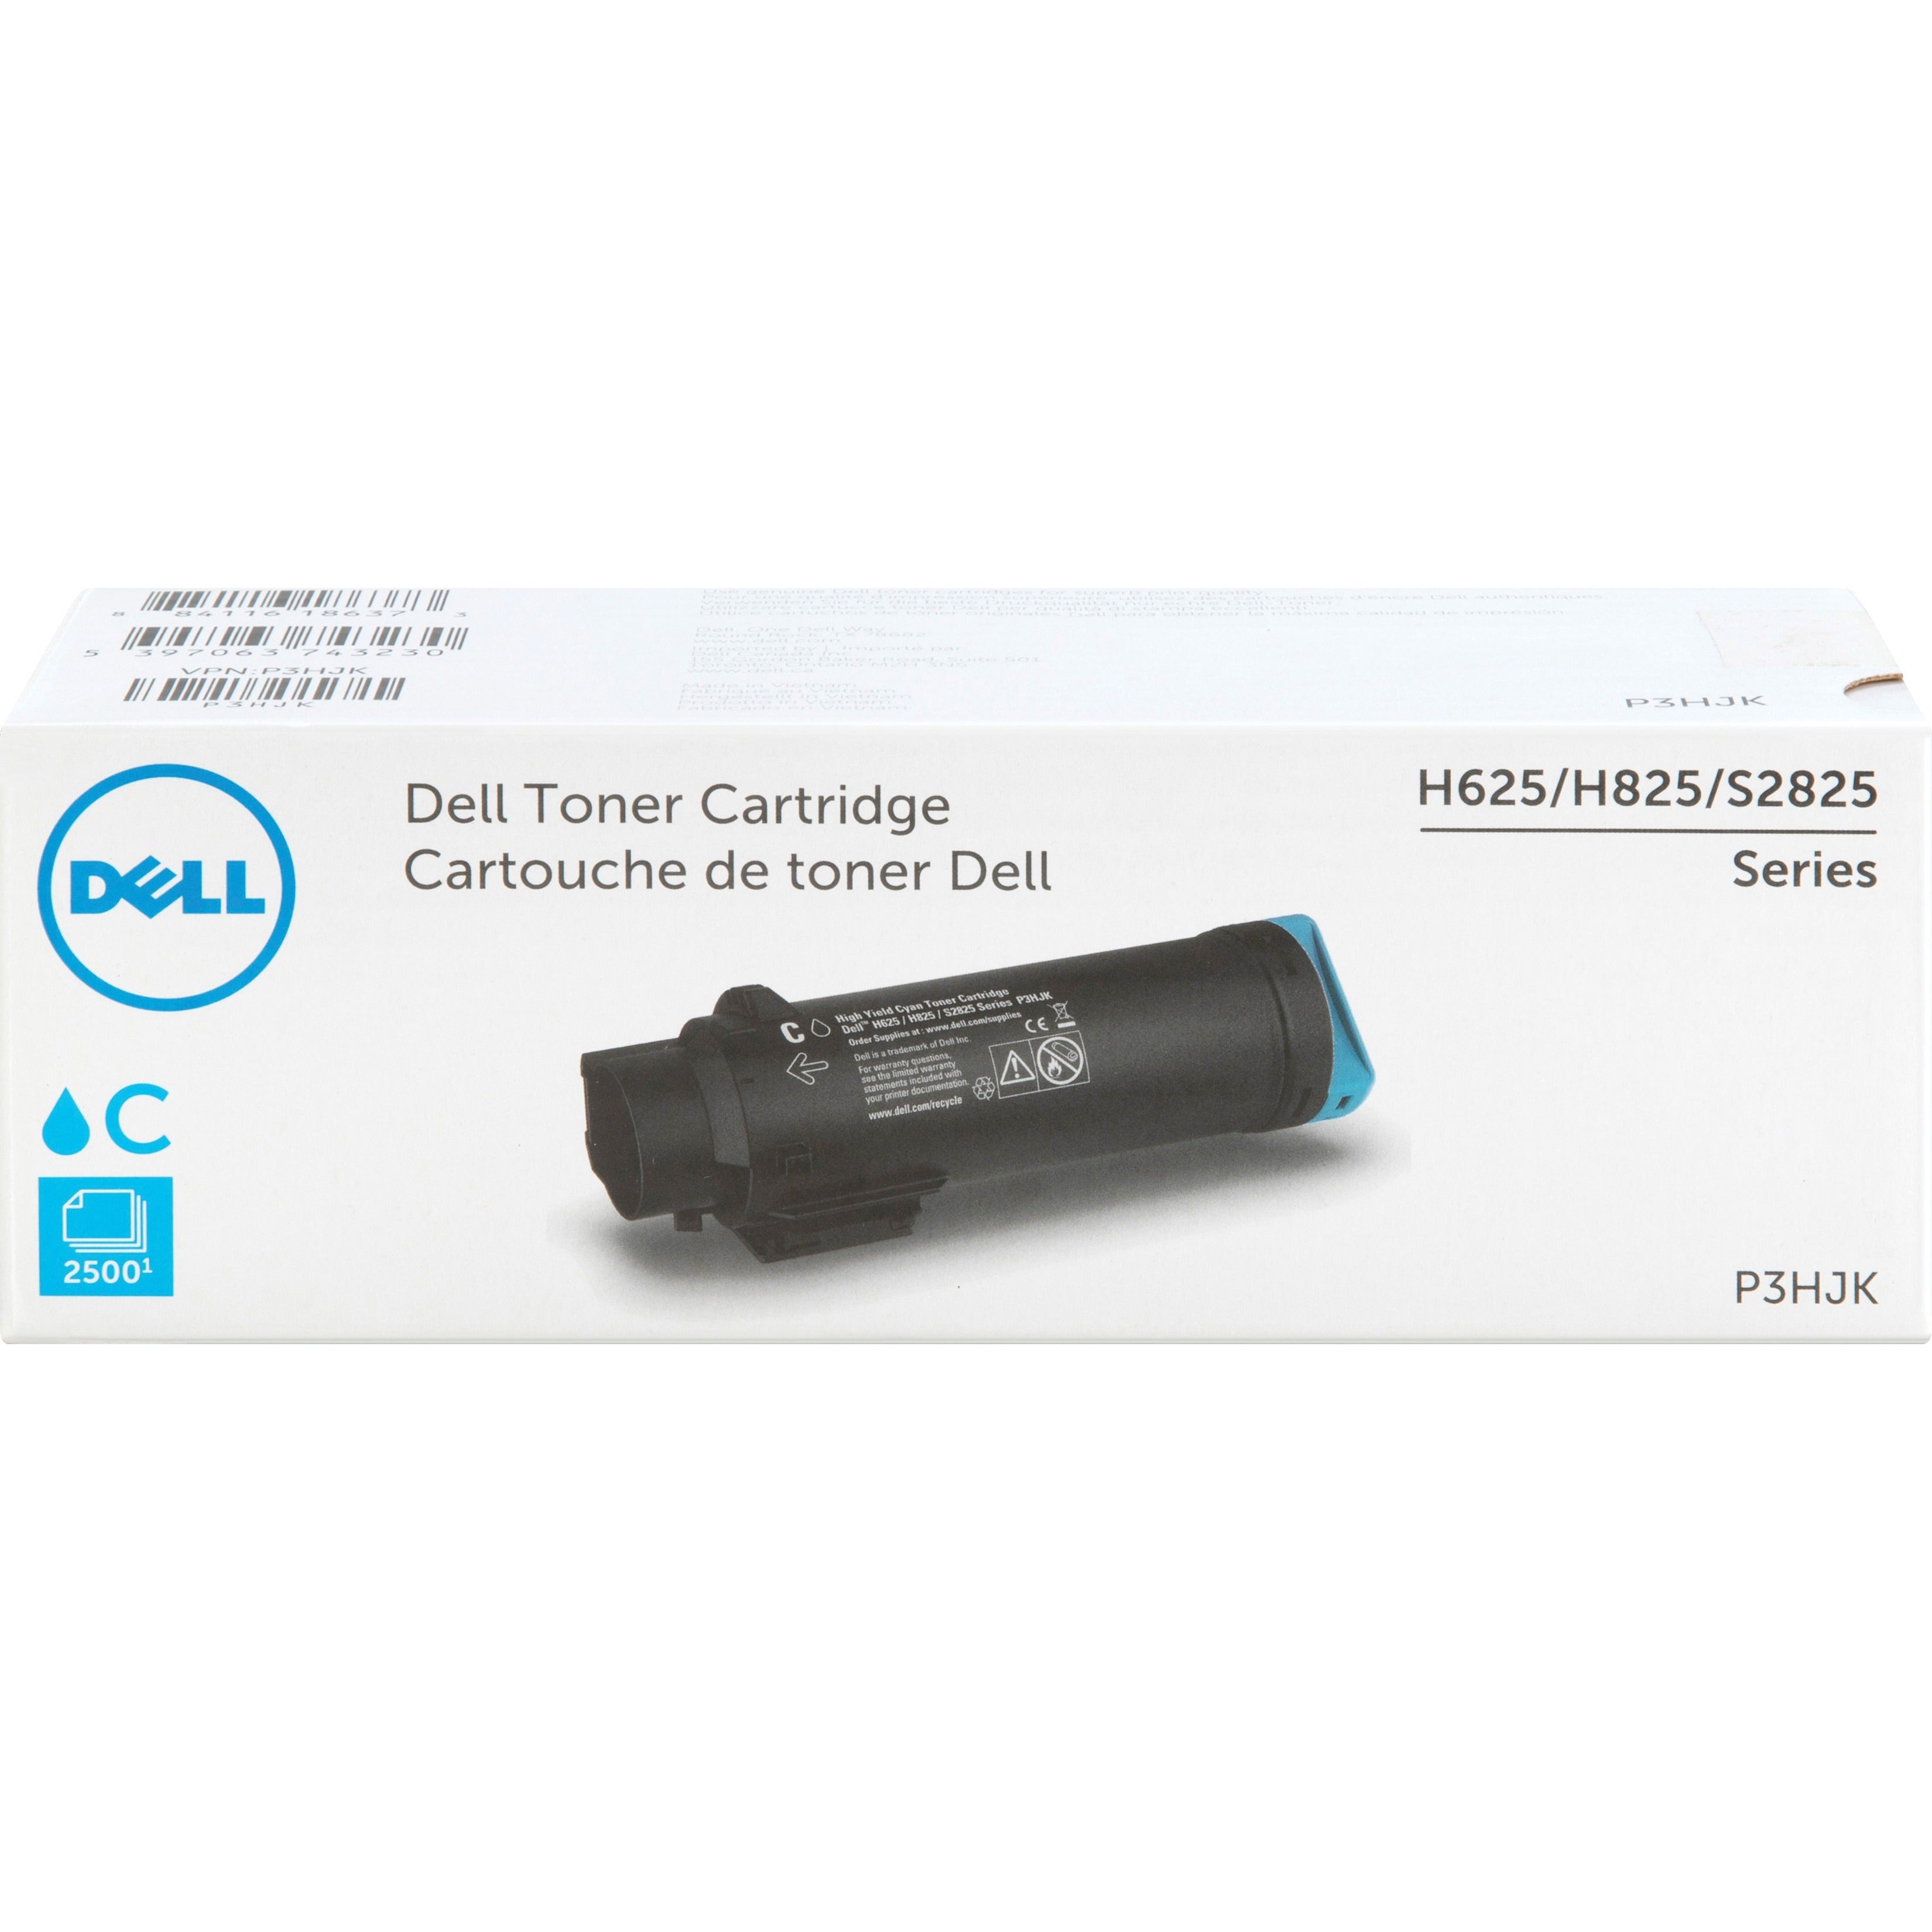 Dell P3HJK Toner Cartridge - High Yield Cyan, Original